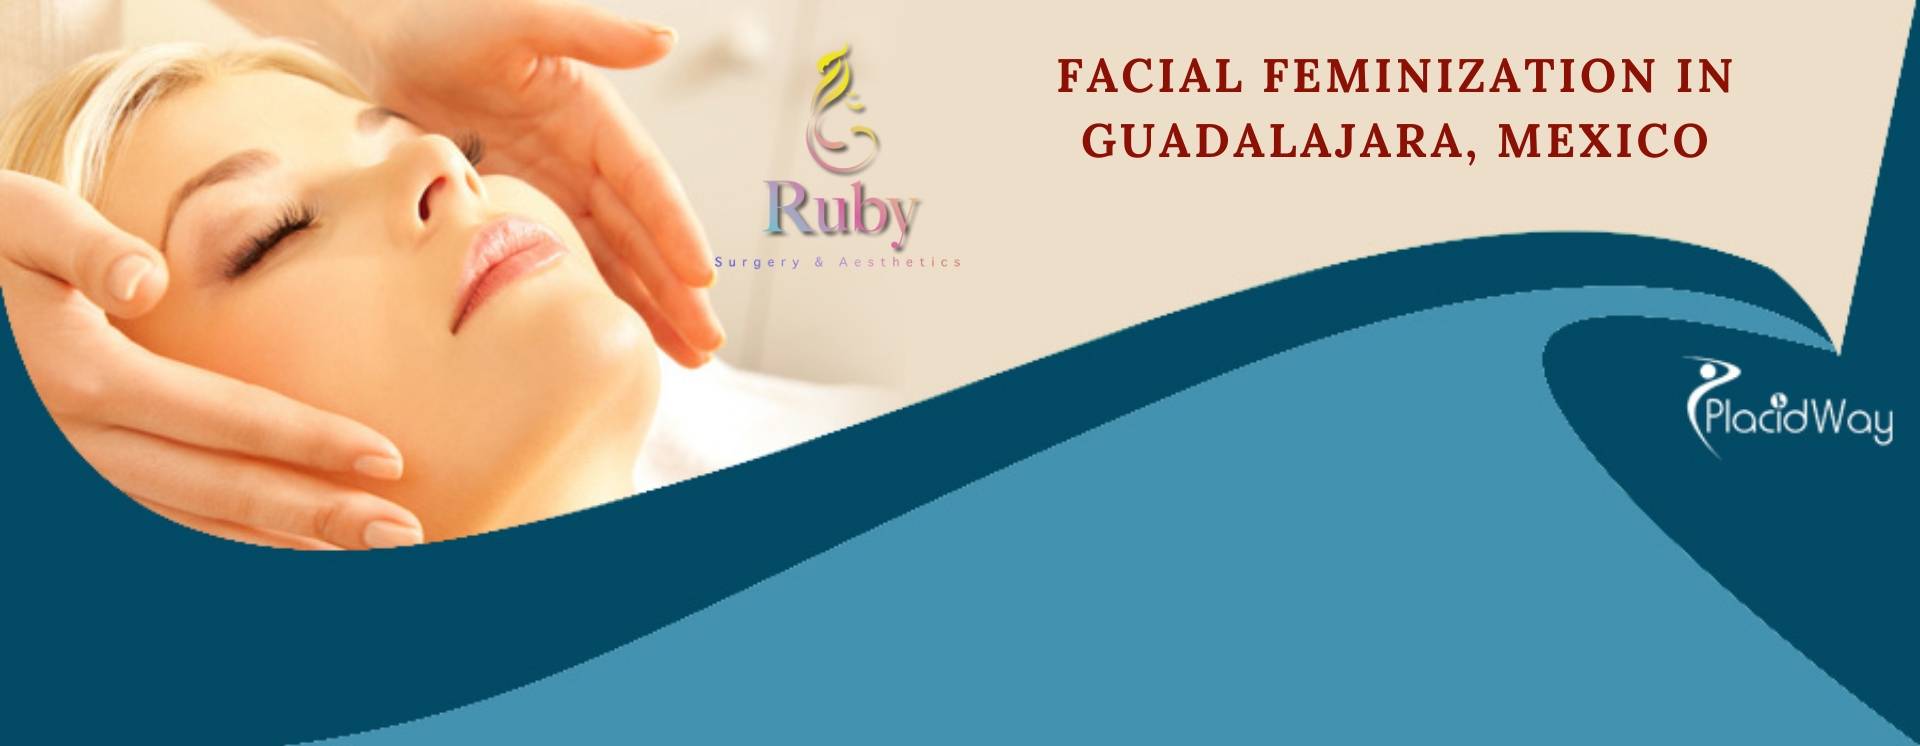 Facial Feminization in Guadalajara, Mexico